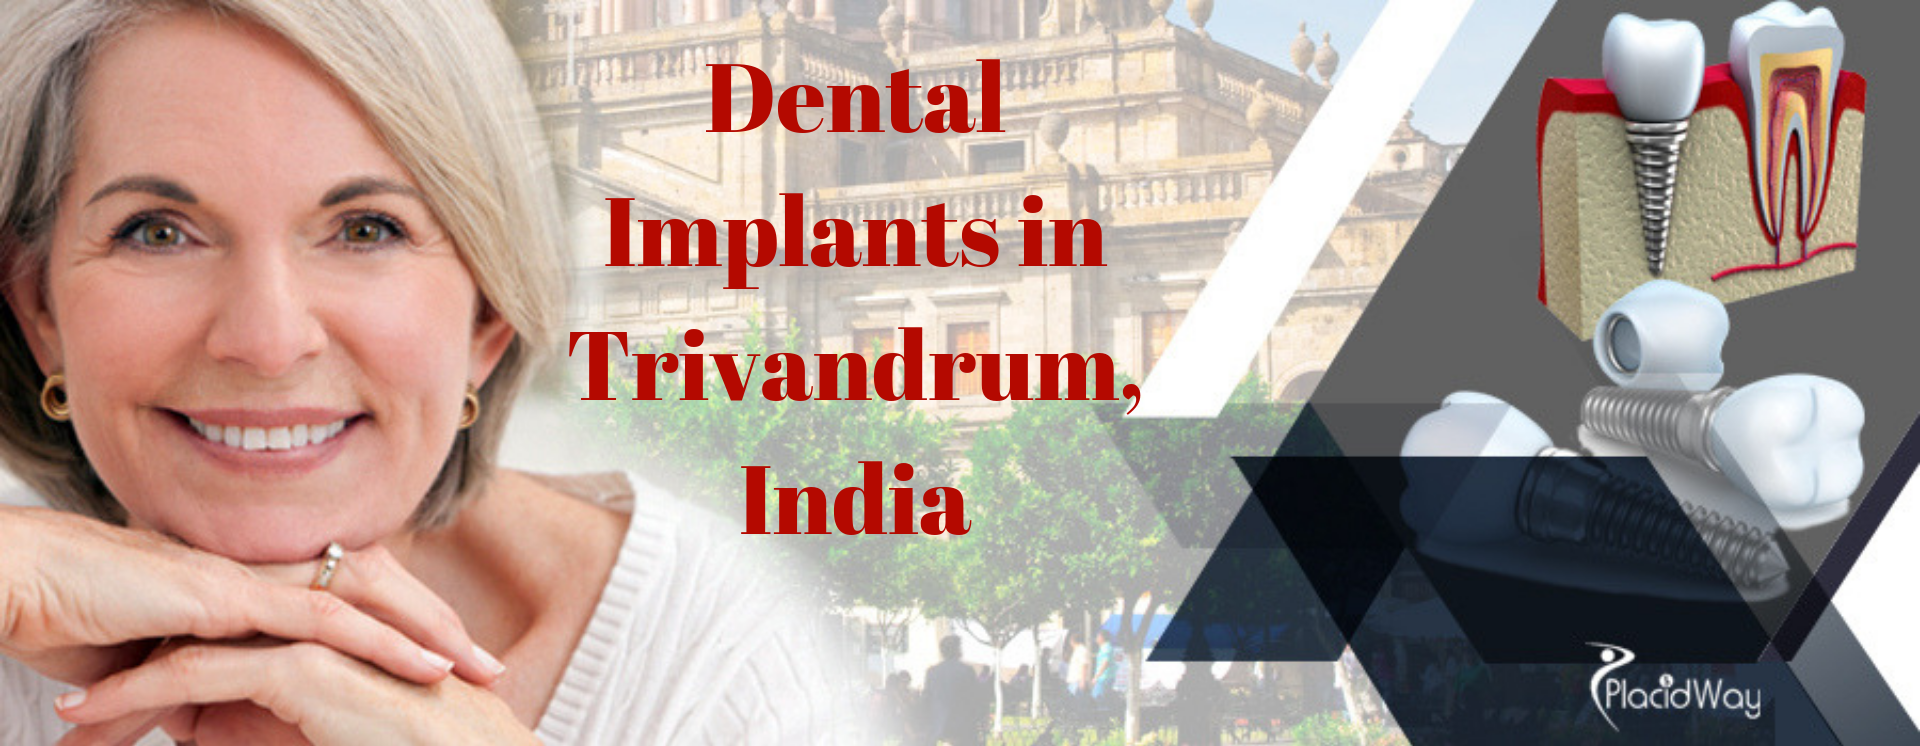 Dental Implants in Trivandrum, India